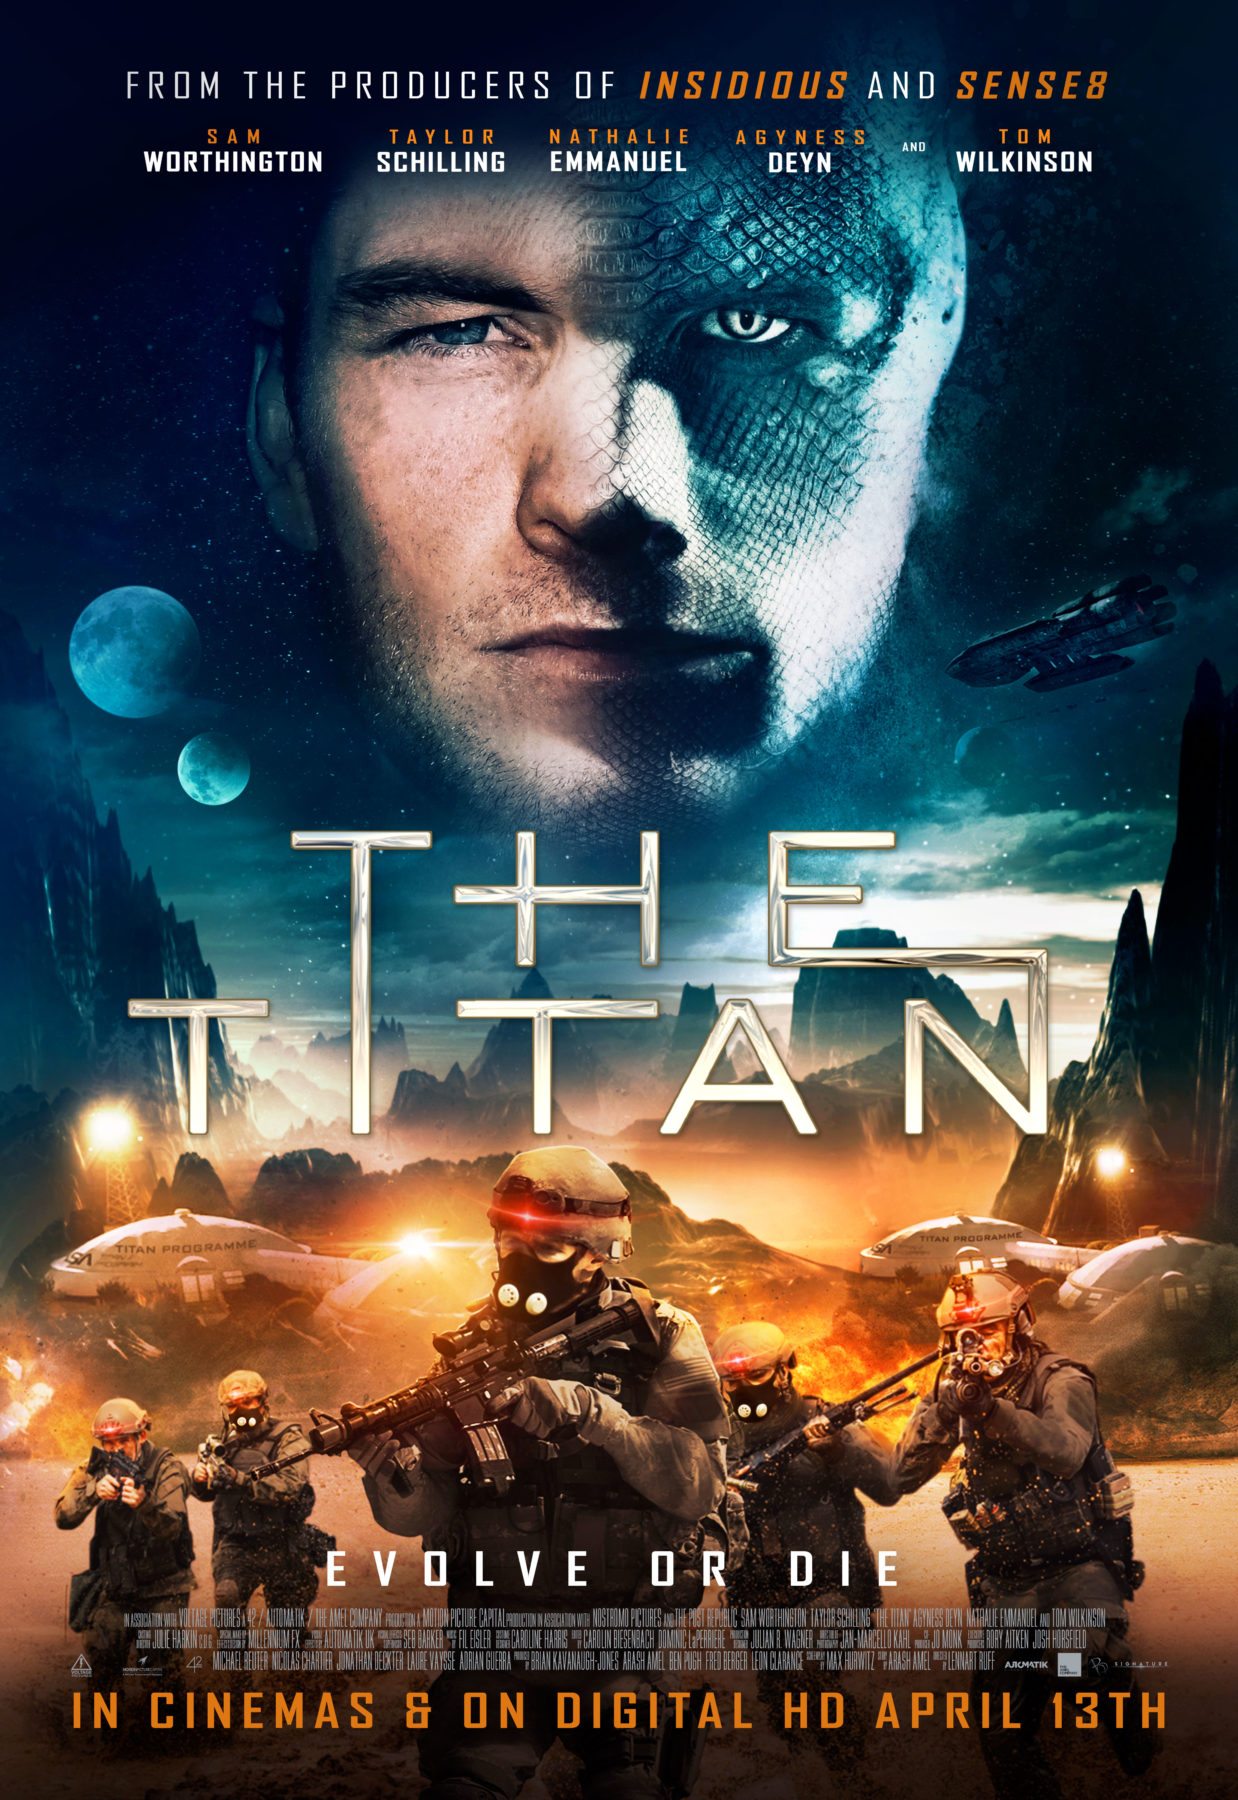 Titan Evolve Or Die